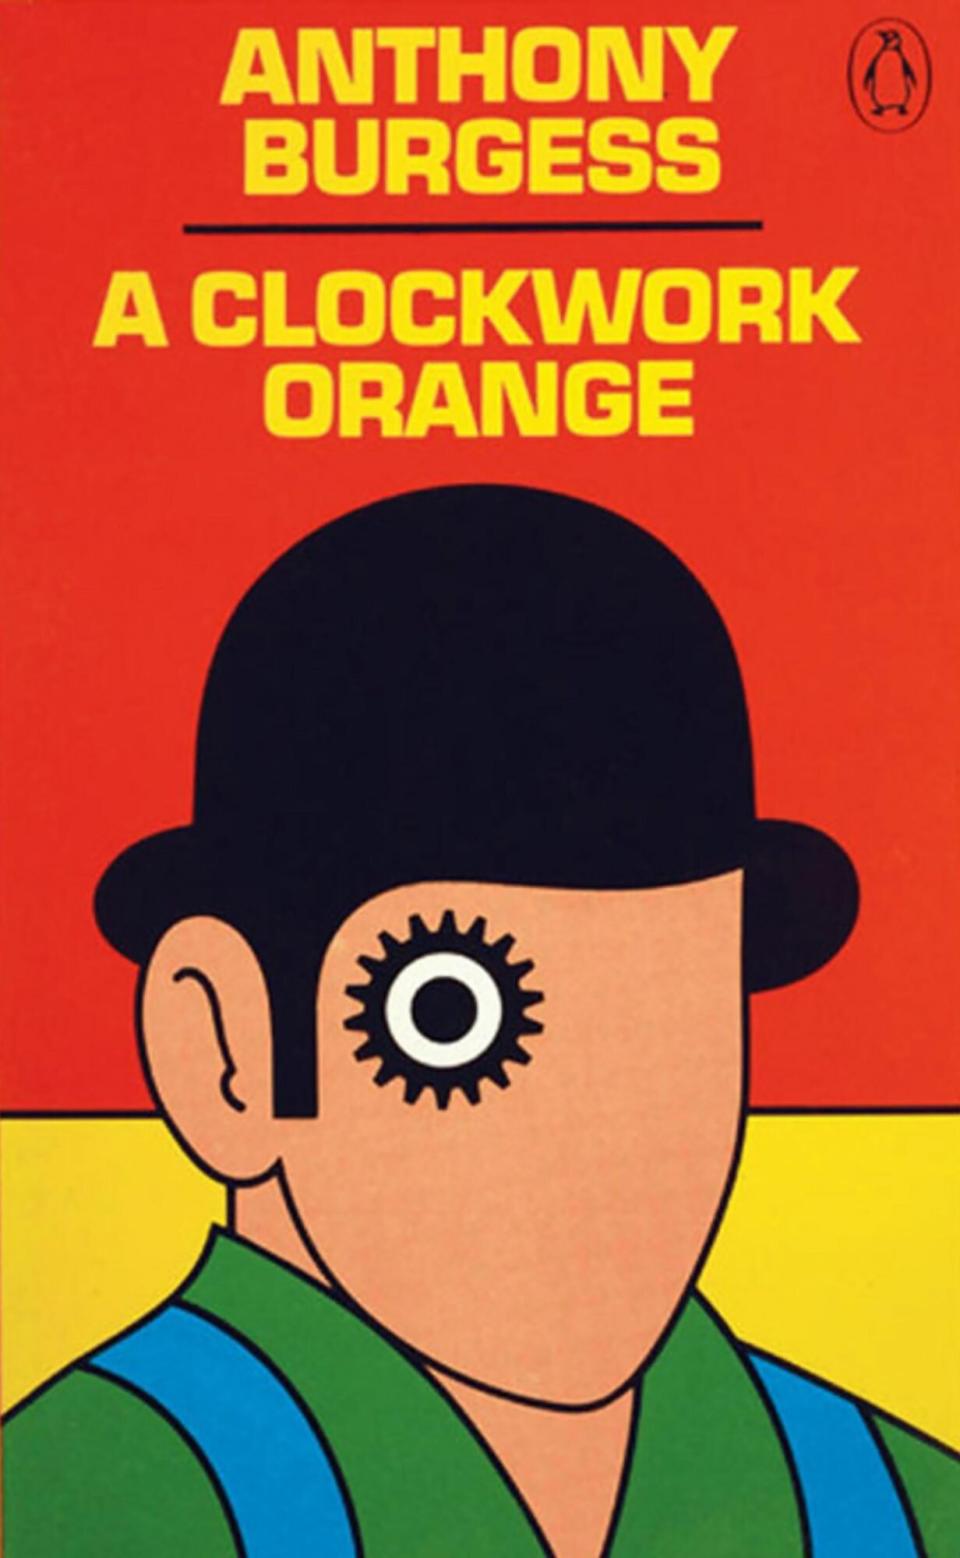 A Clockwork Orange by Anthony Burgess CR: Penguin